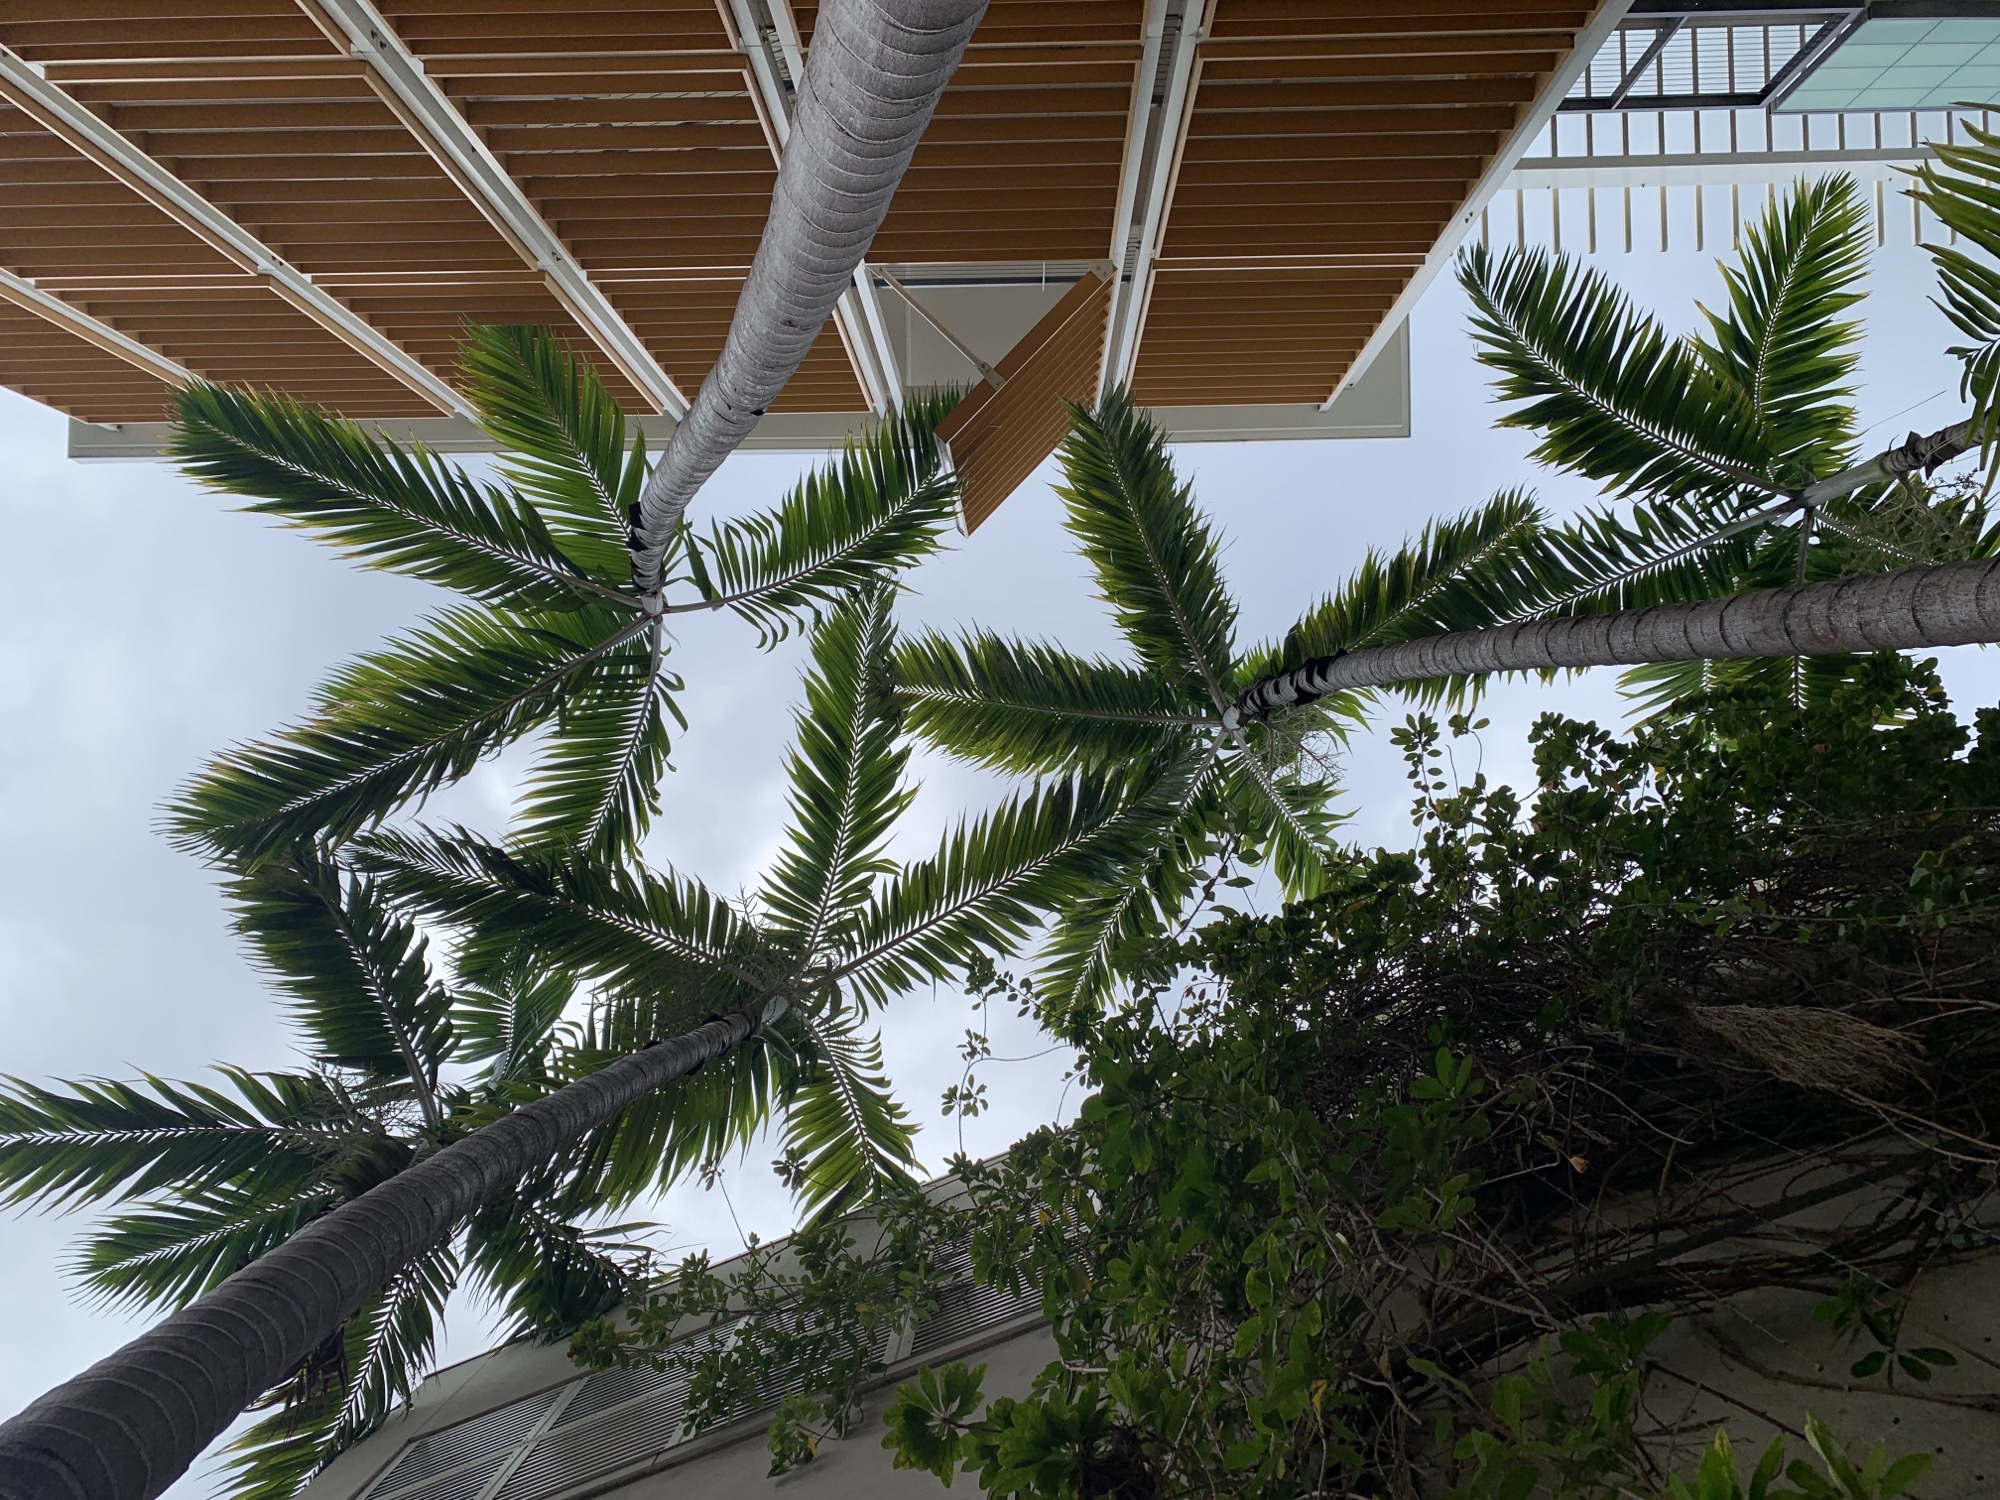 Underneath tall palm tree